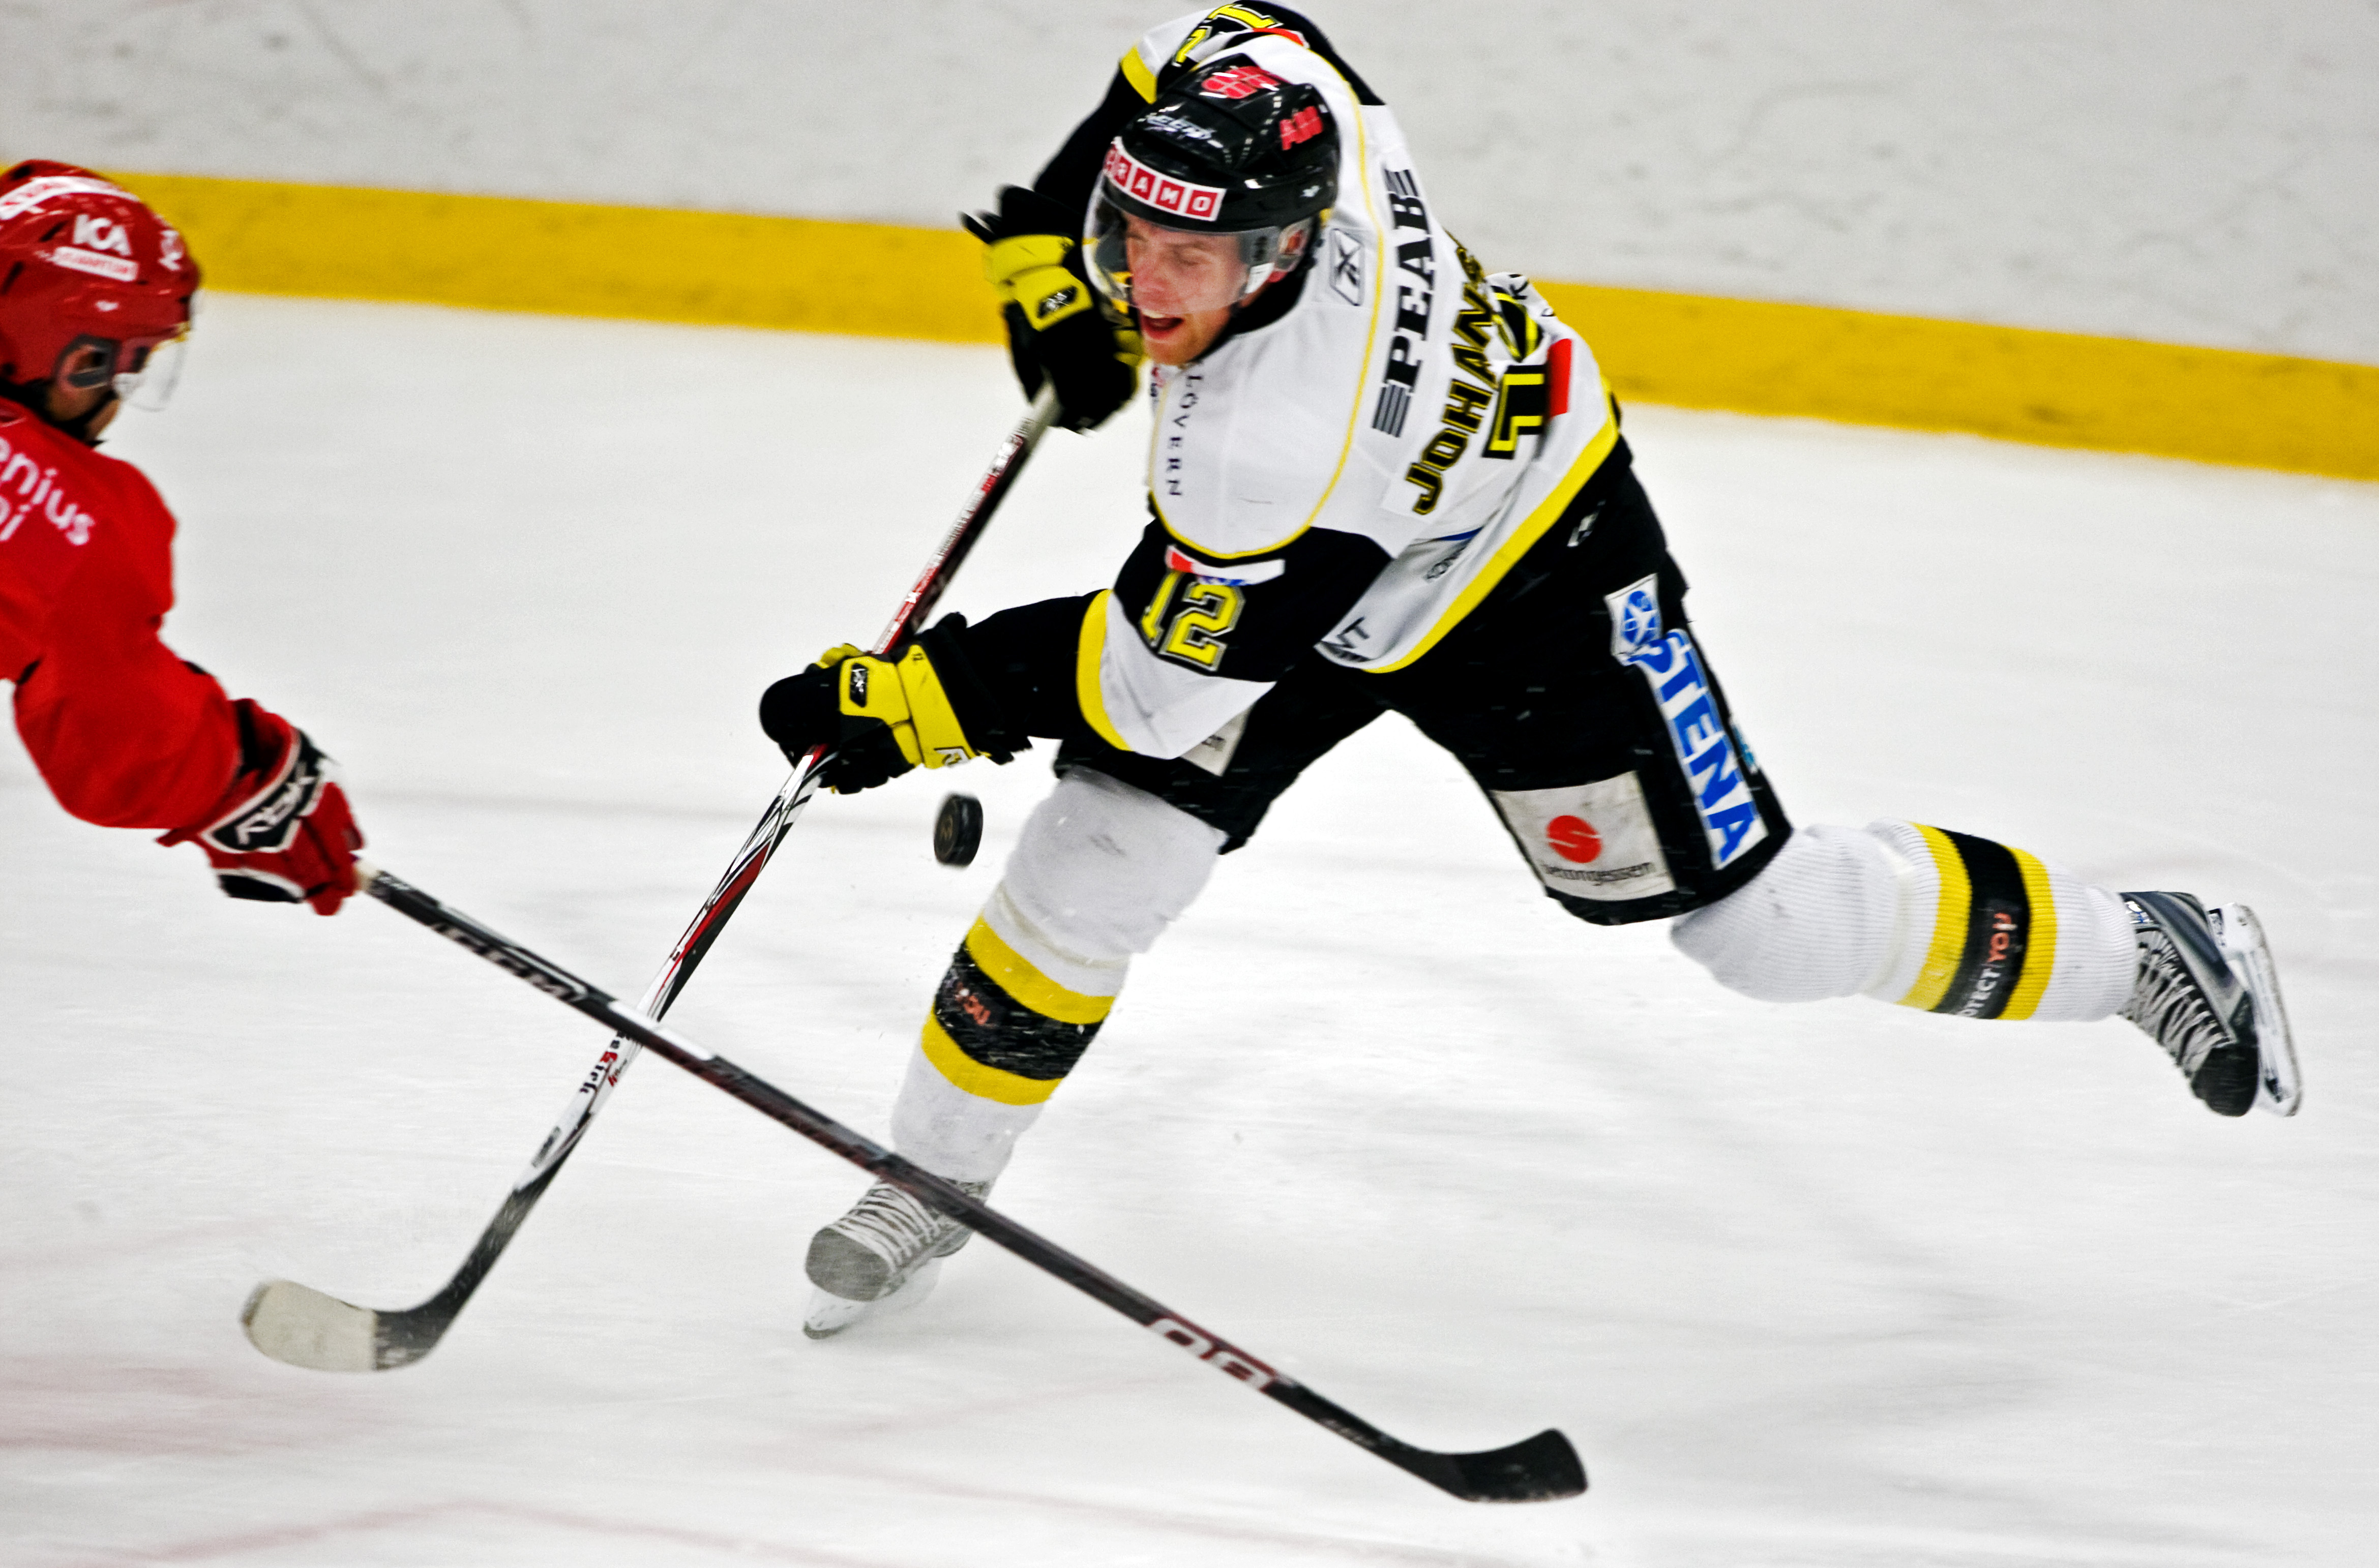 HockeyAllsvenskan, Fredrik Johansson, leukemi, Vasteras IK